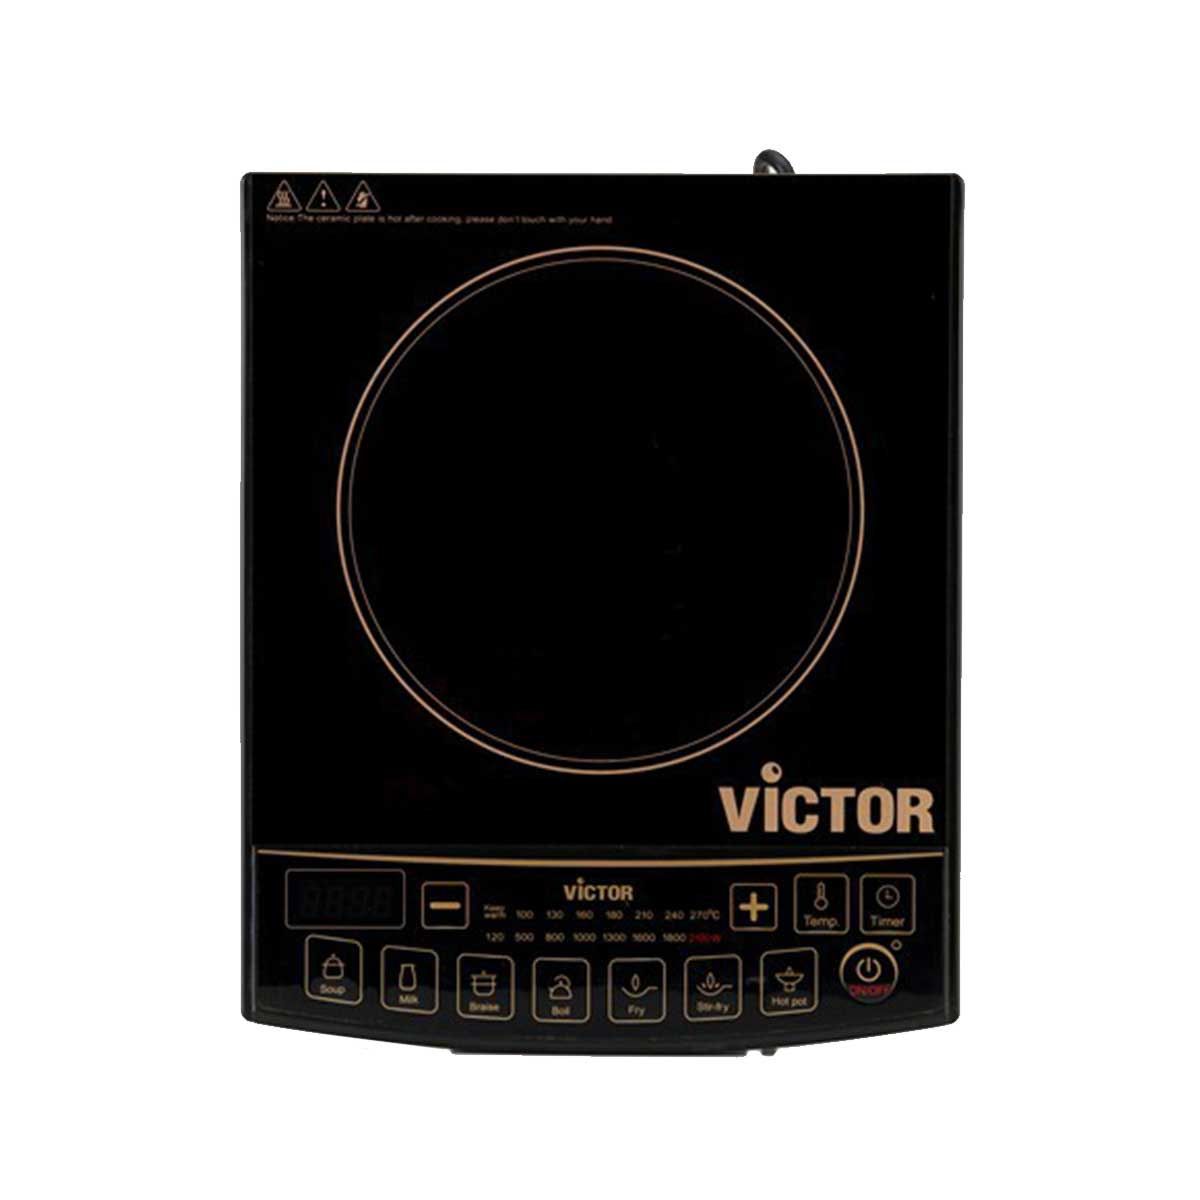 VICTOR เตาแม่เหล็กไฟฟ้า รุ่น VT-216D